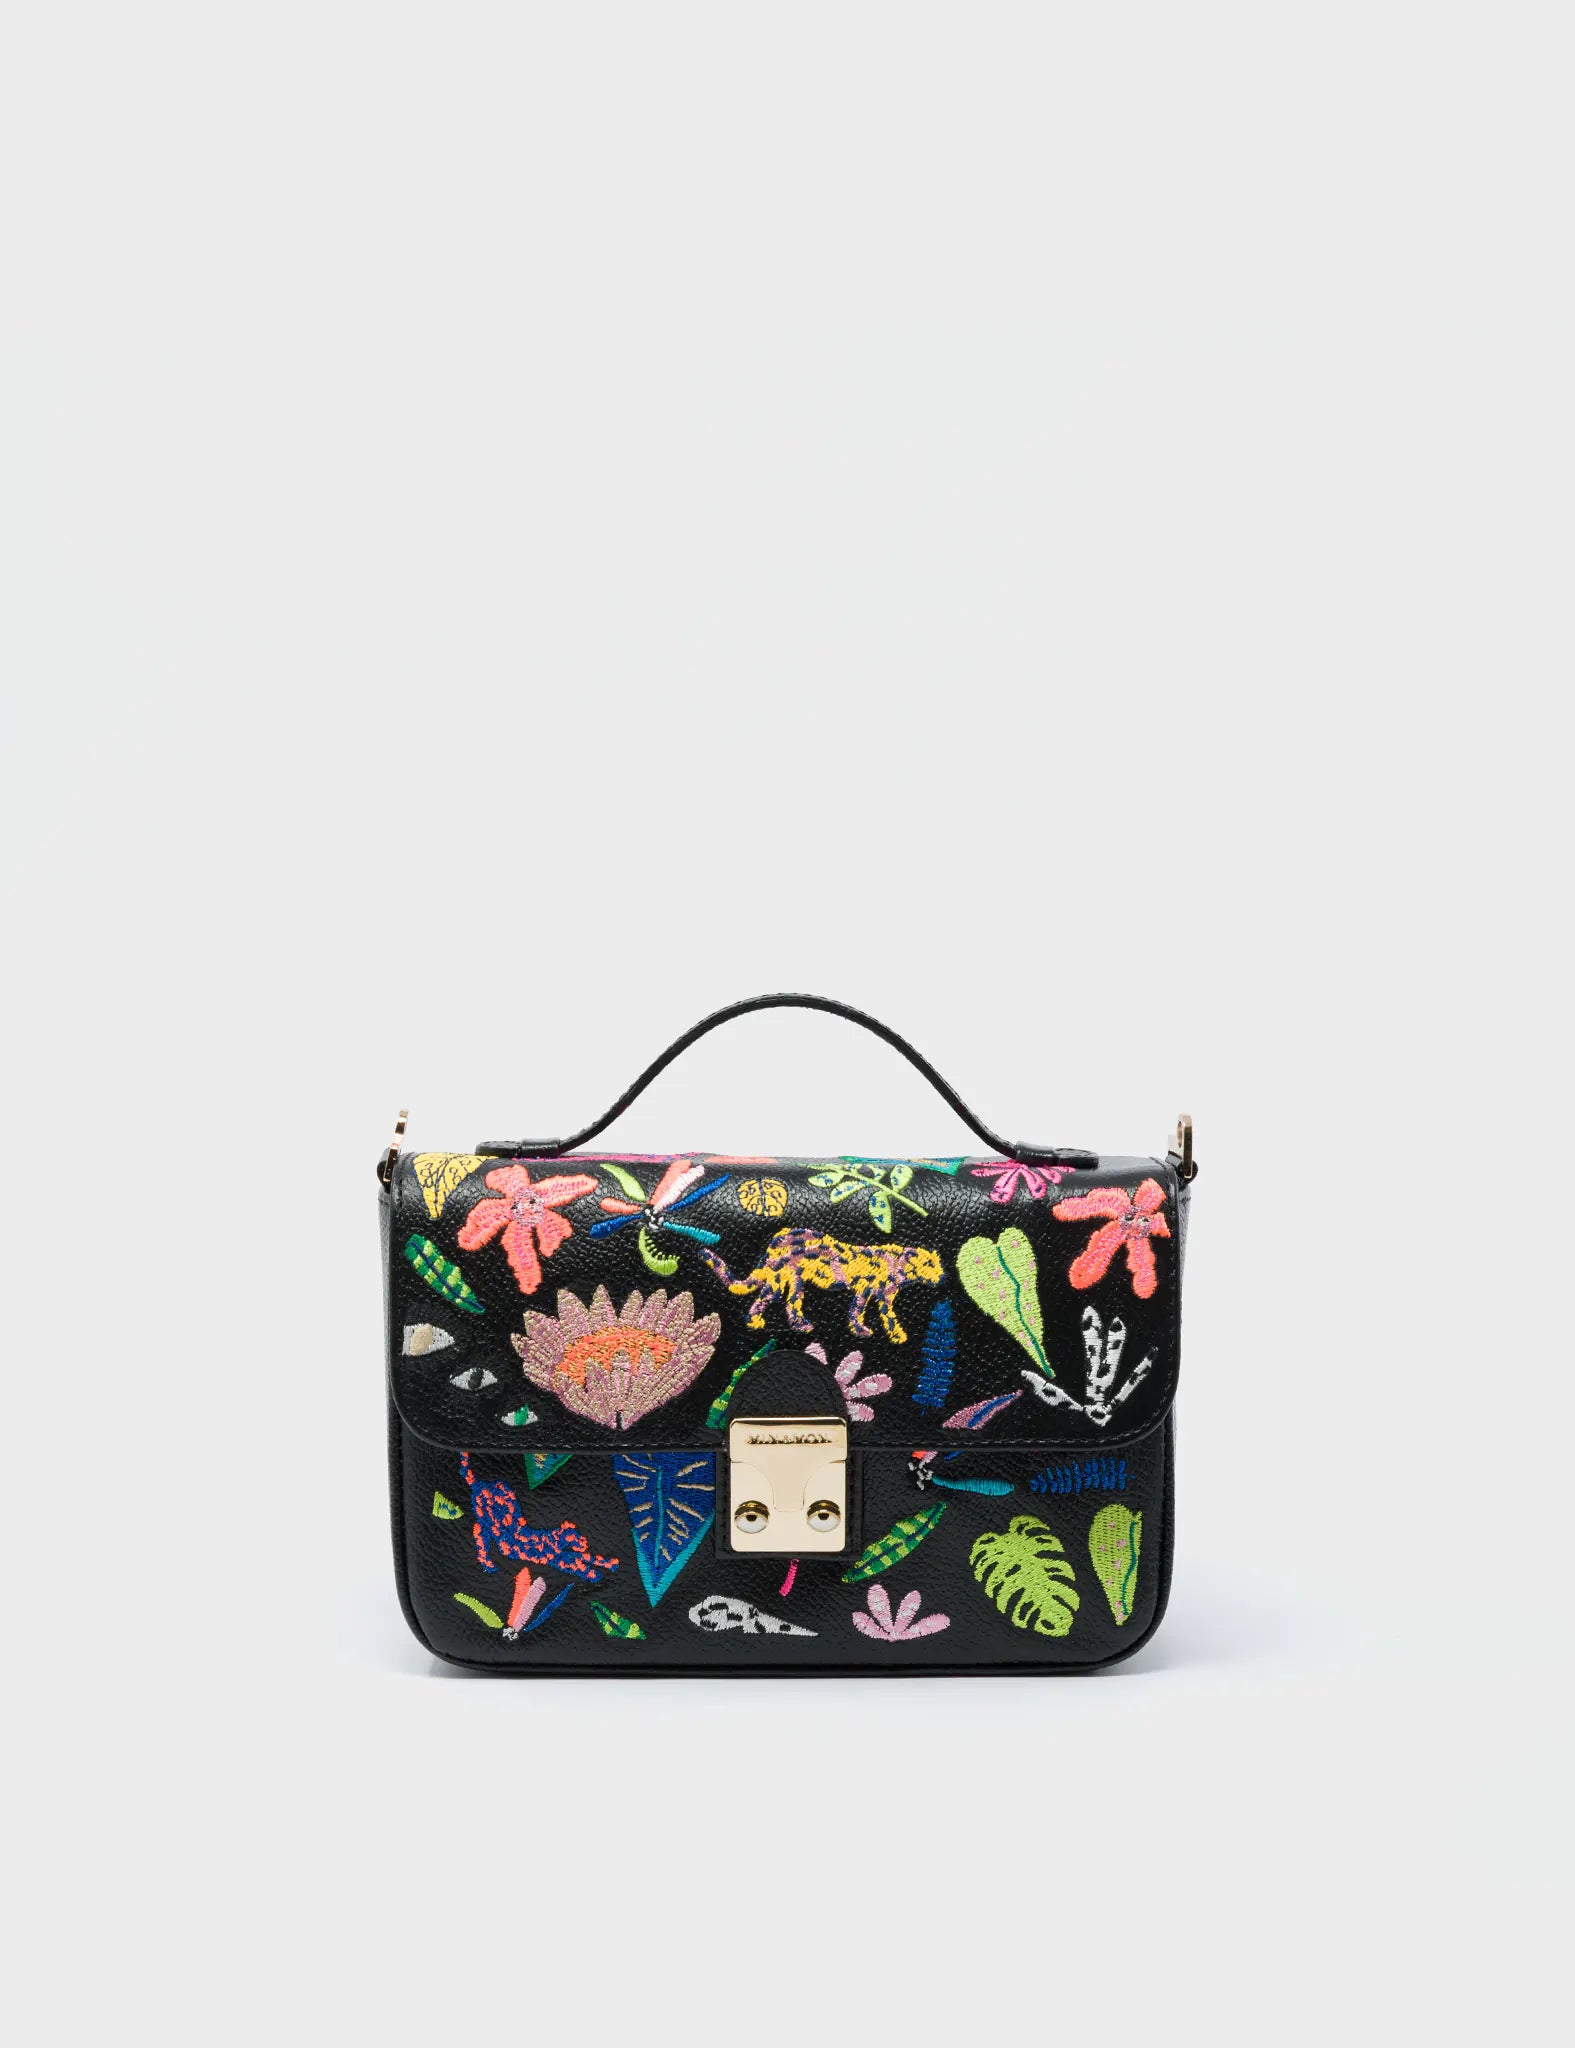 Amantis Cameo Black Leather Crossbody Mini Handbag - El Trópico Embroidery Design - Front